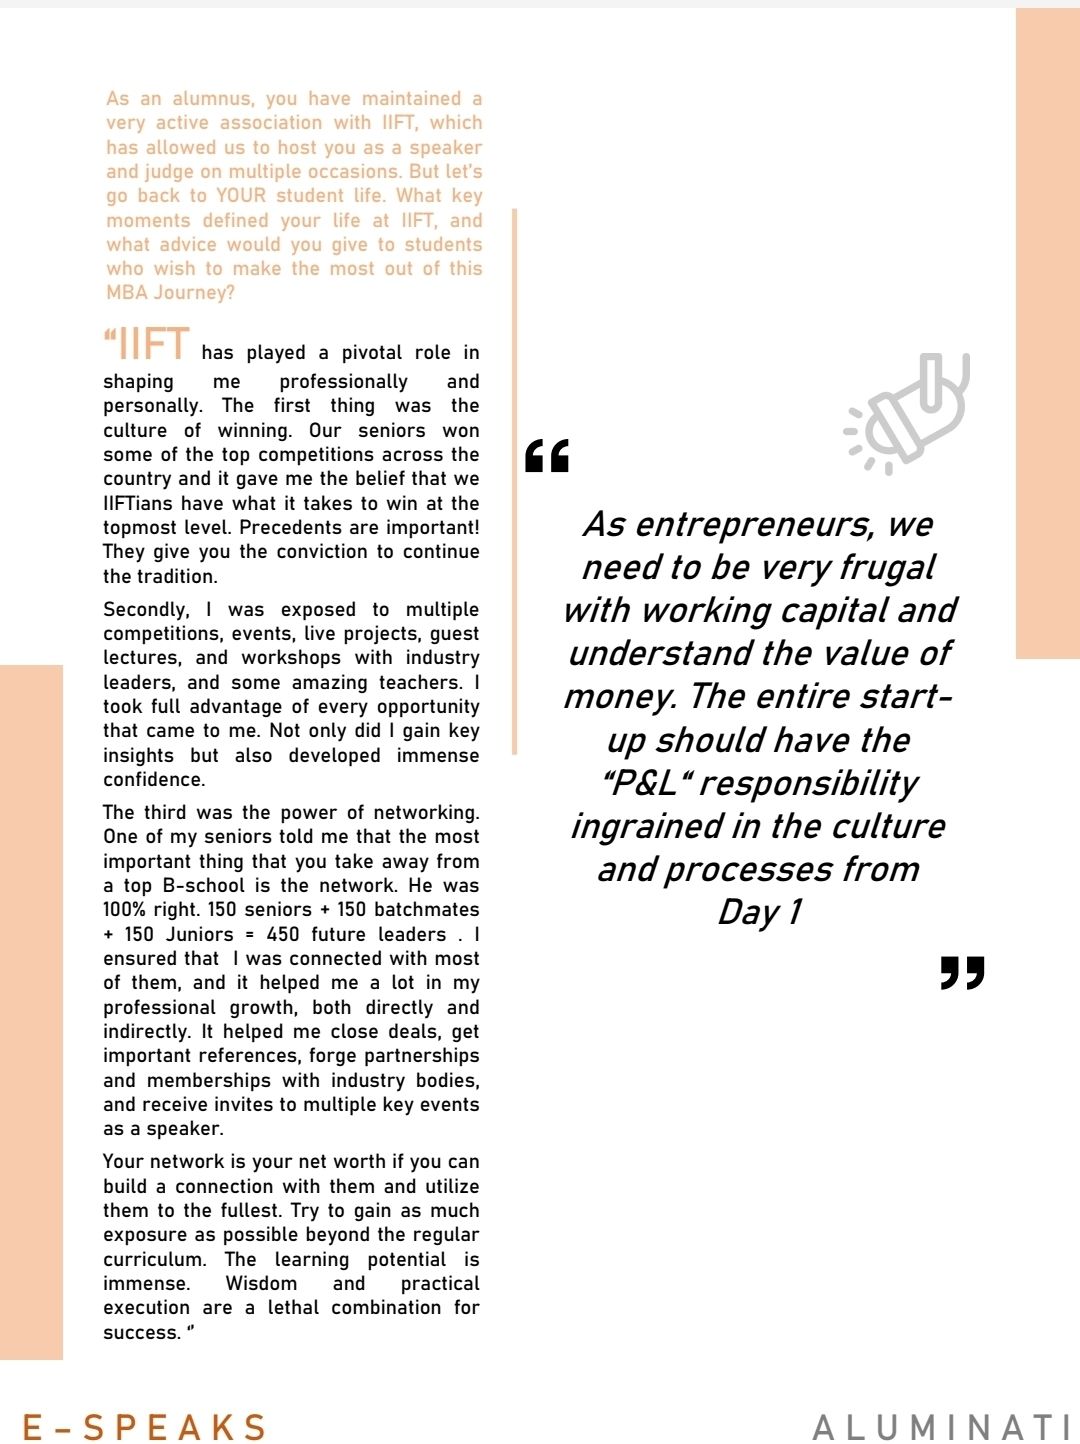 Interview  published : Entrepreneurs Speak  - Aluminati Magazine IIFT 